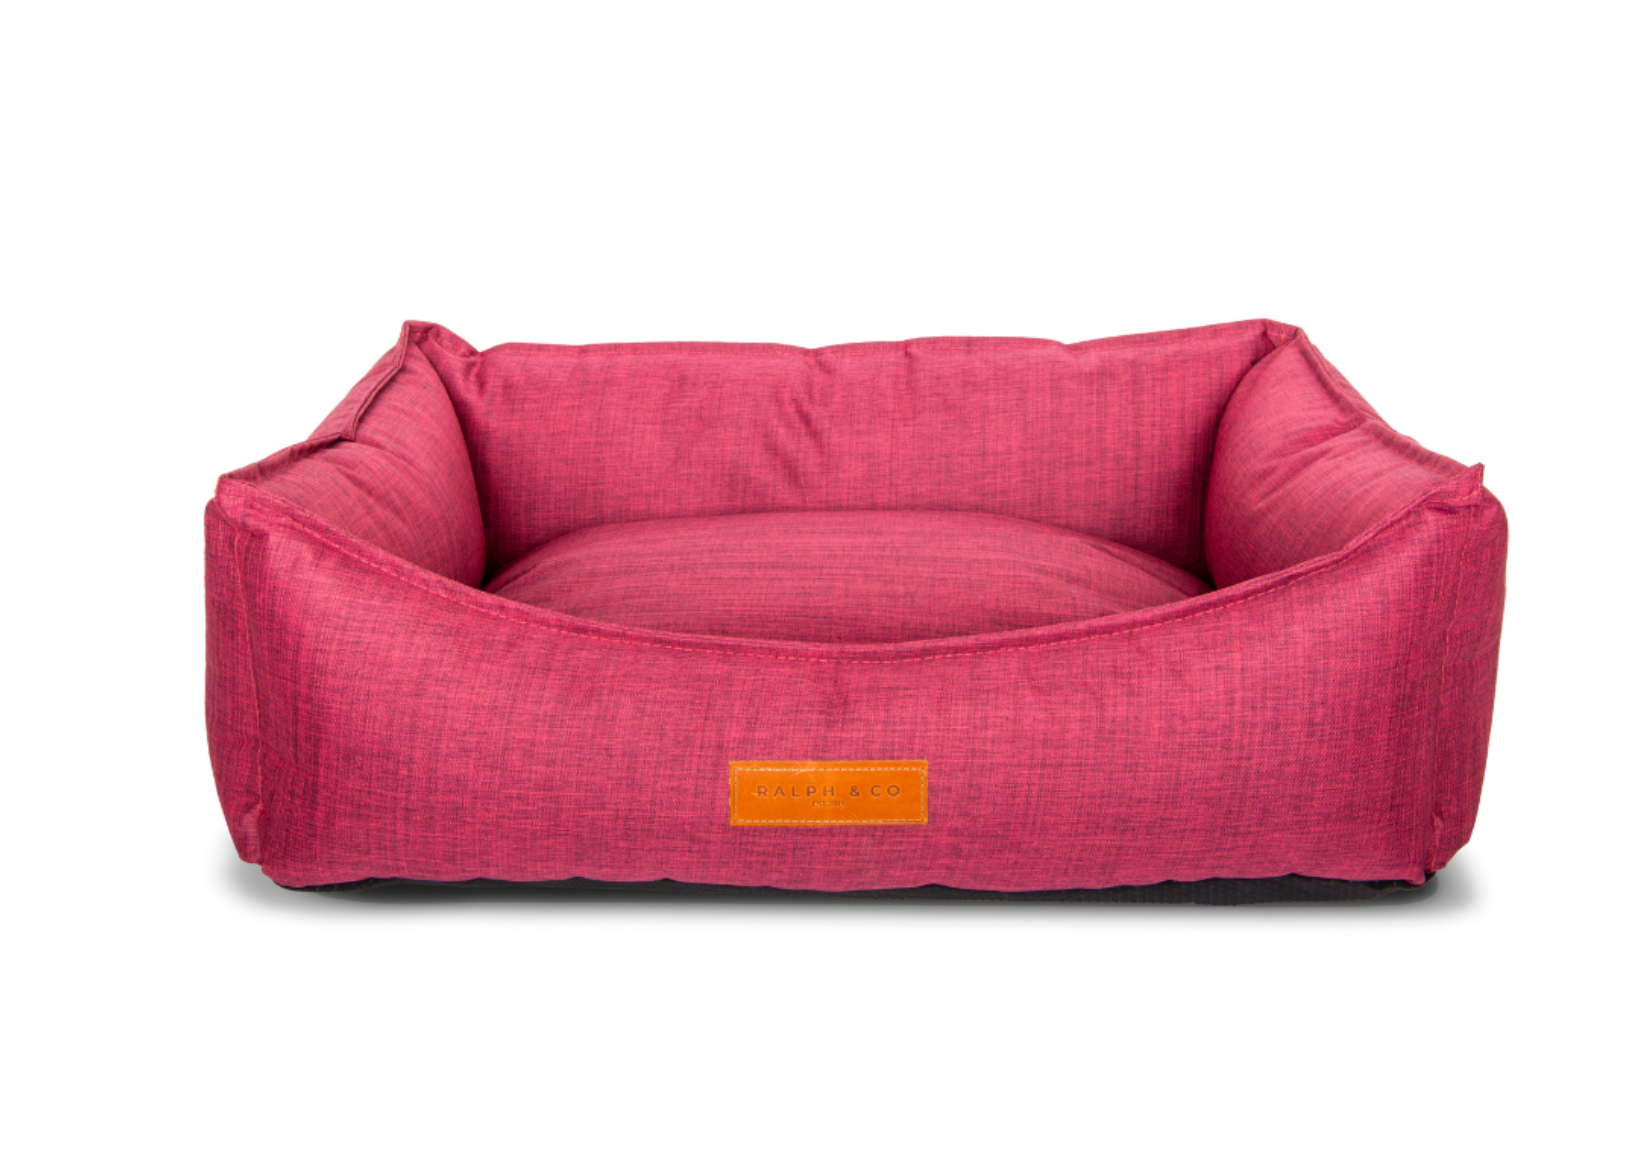 Pink Dog Bed